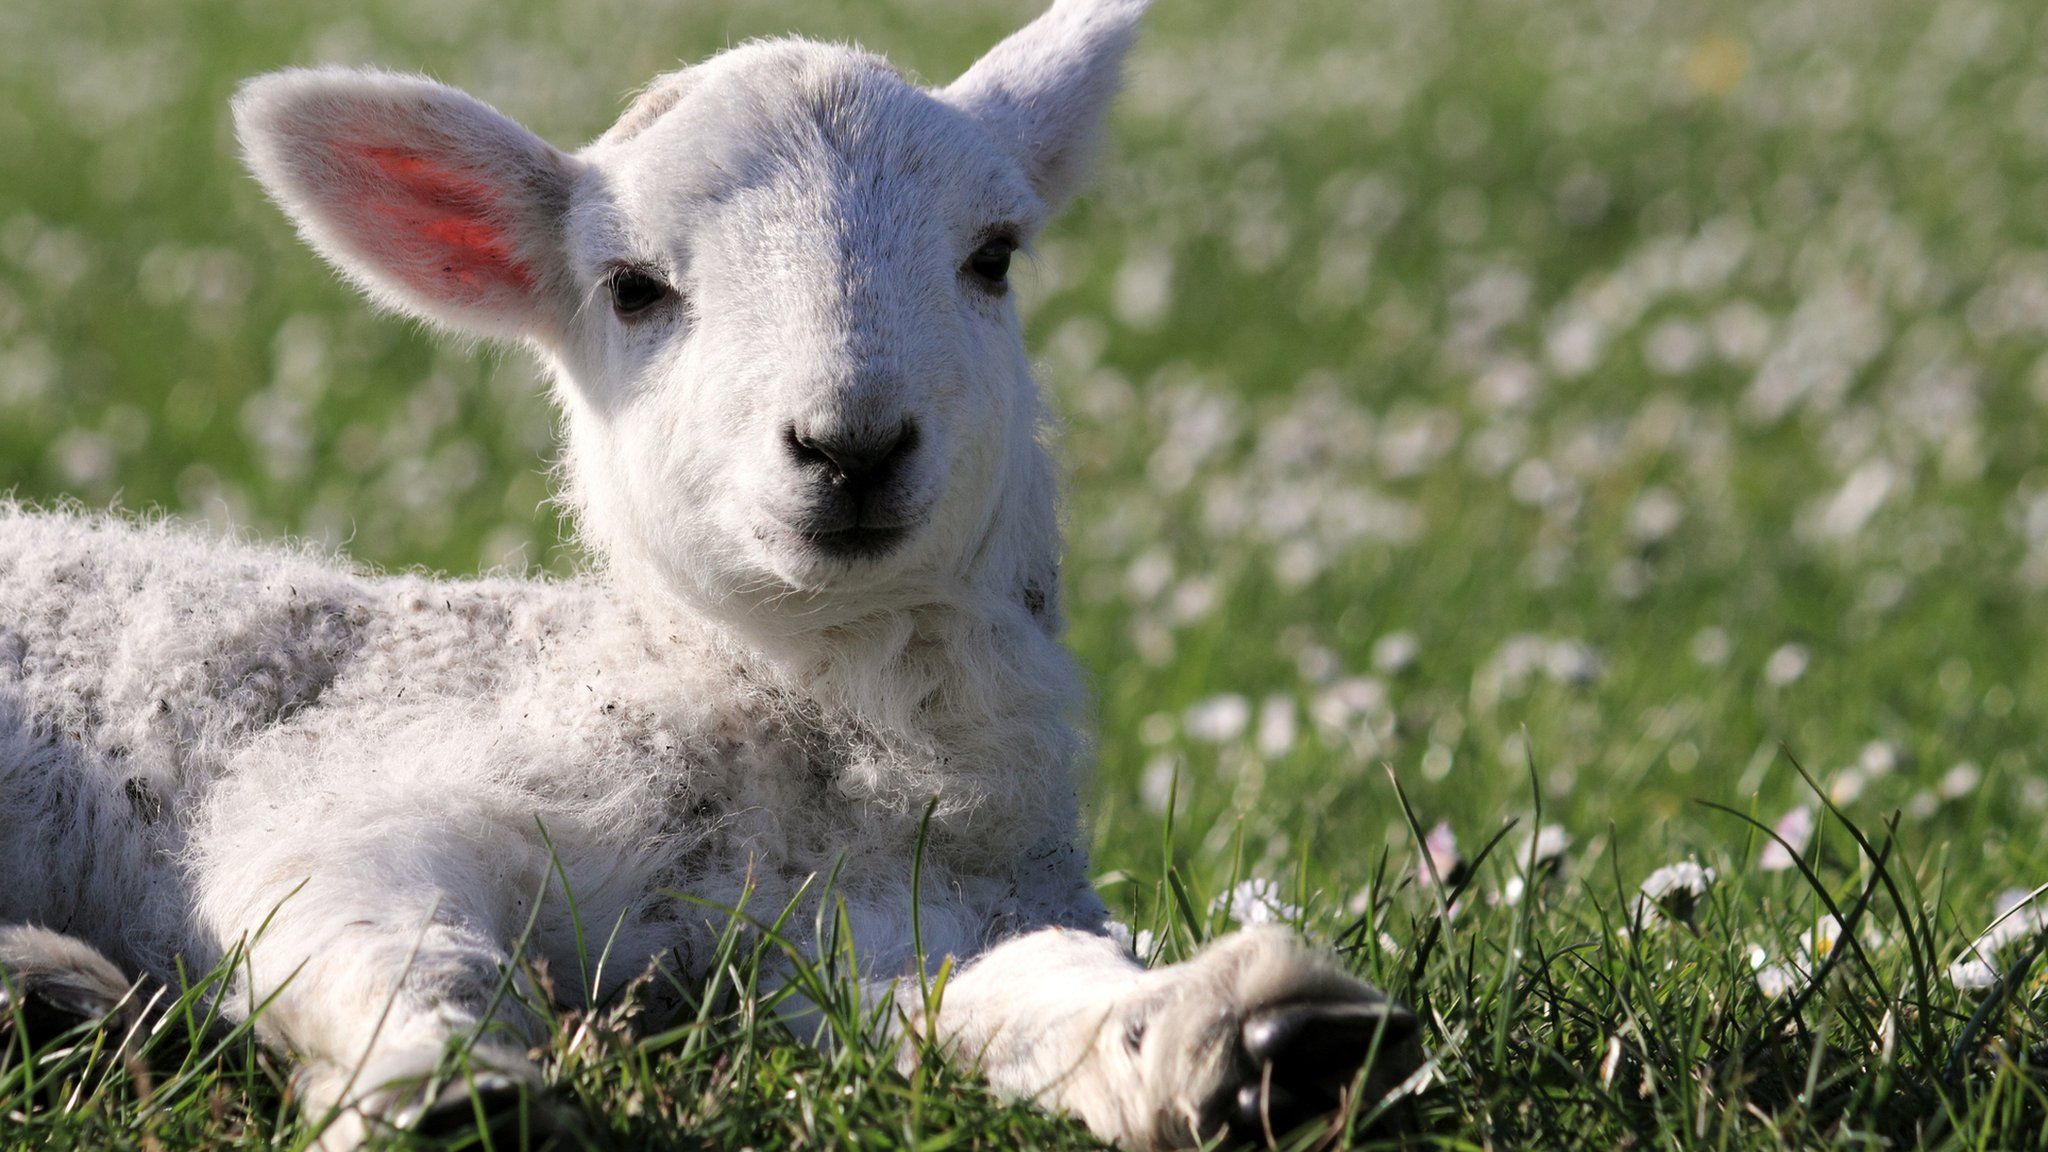 Spring lamb